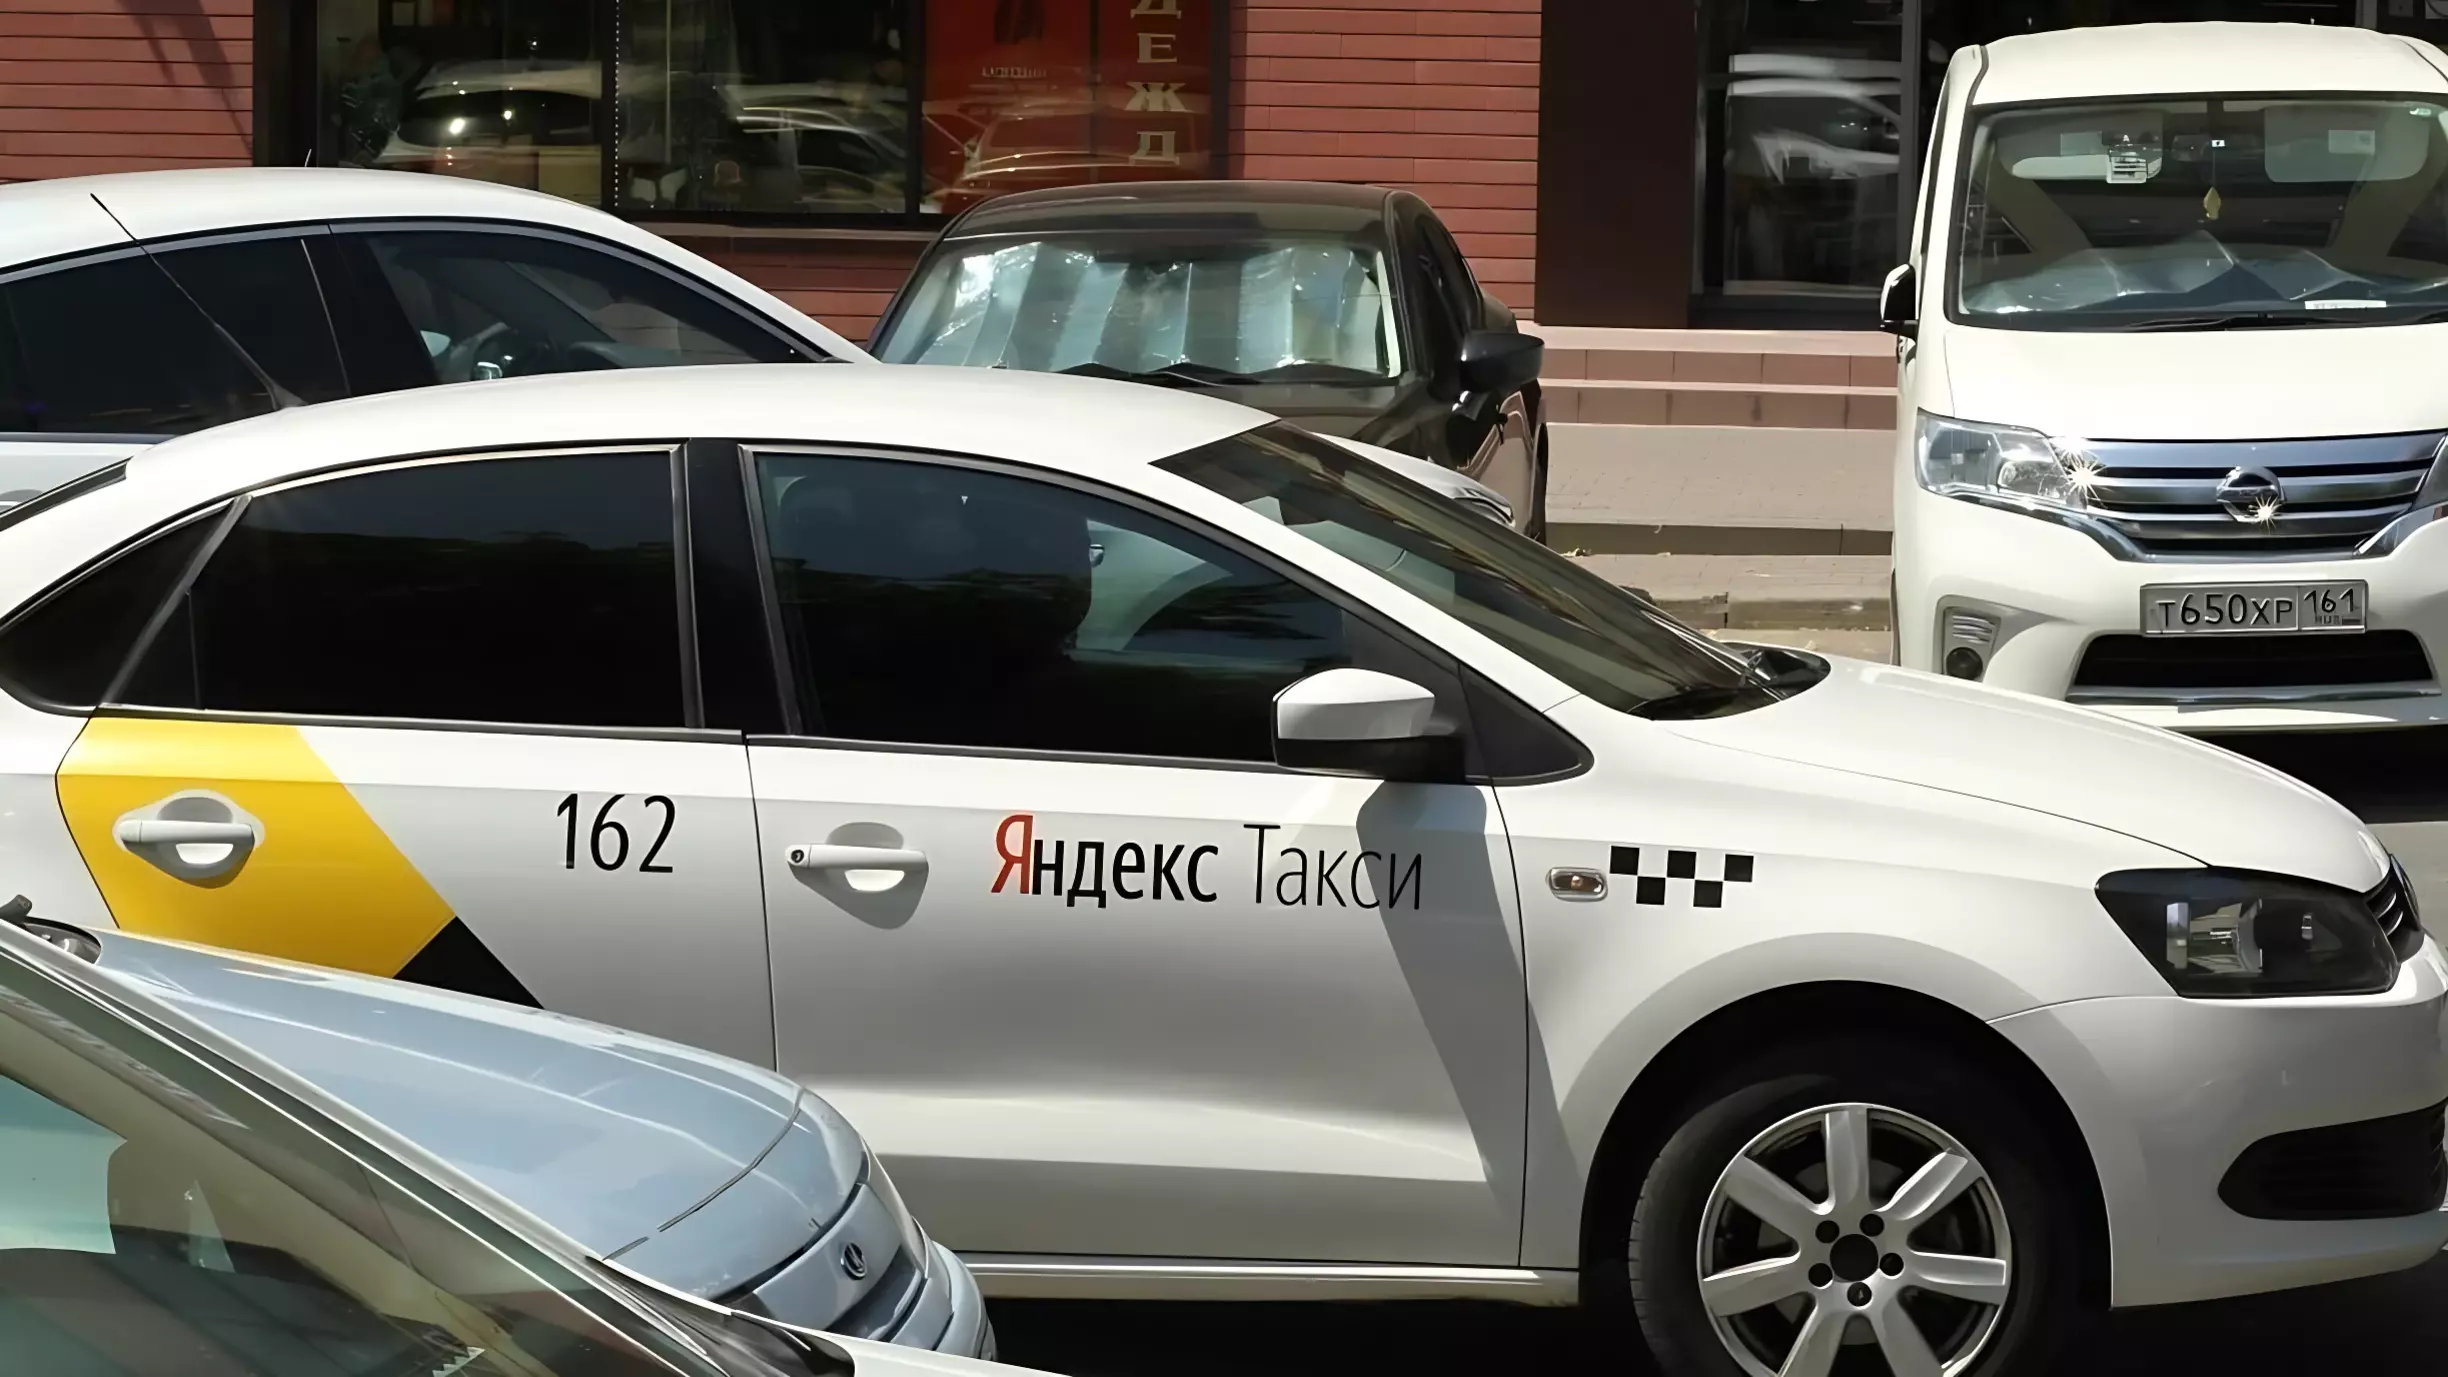 Антимонопольщики взялись за «Яндекс Такси»